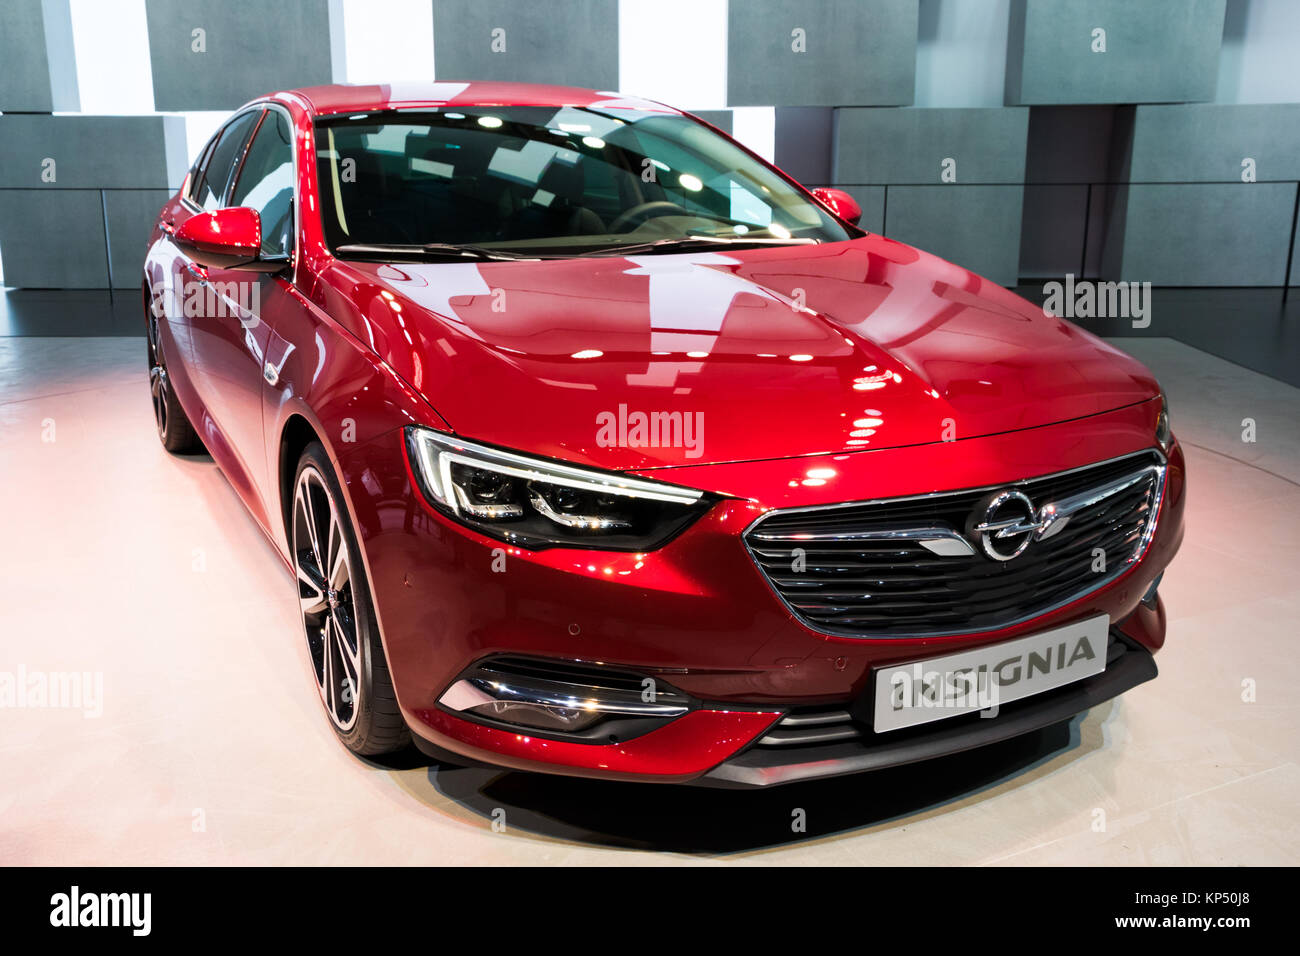 GENEVA, SWITZERLAND - MARCH 7, 2017: Opel Insignia car presented at the 87th Geneva International Motor Show. Stock Photo